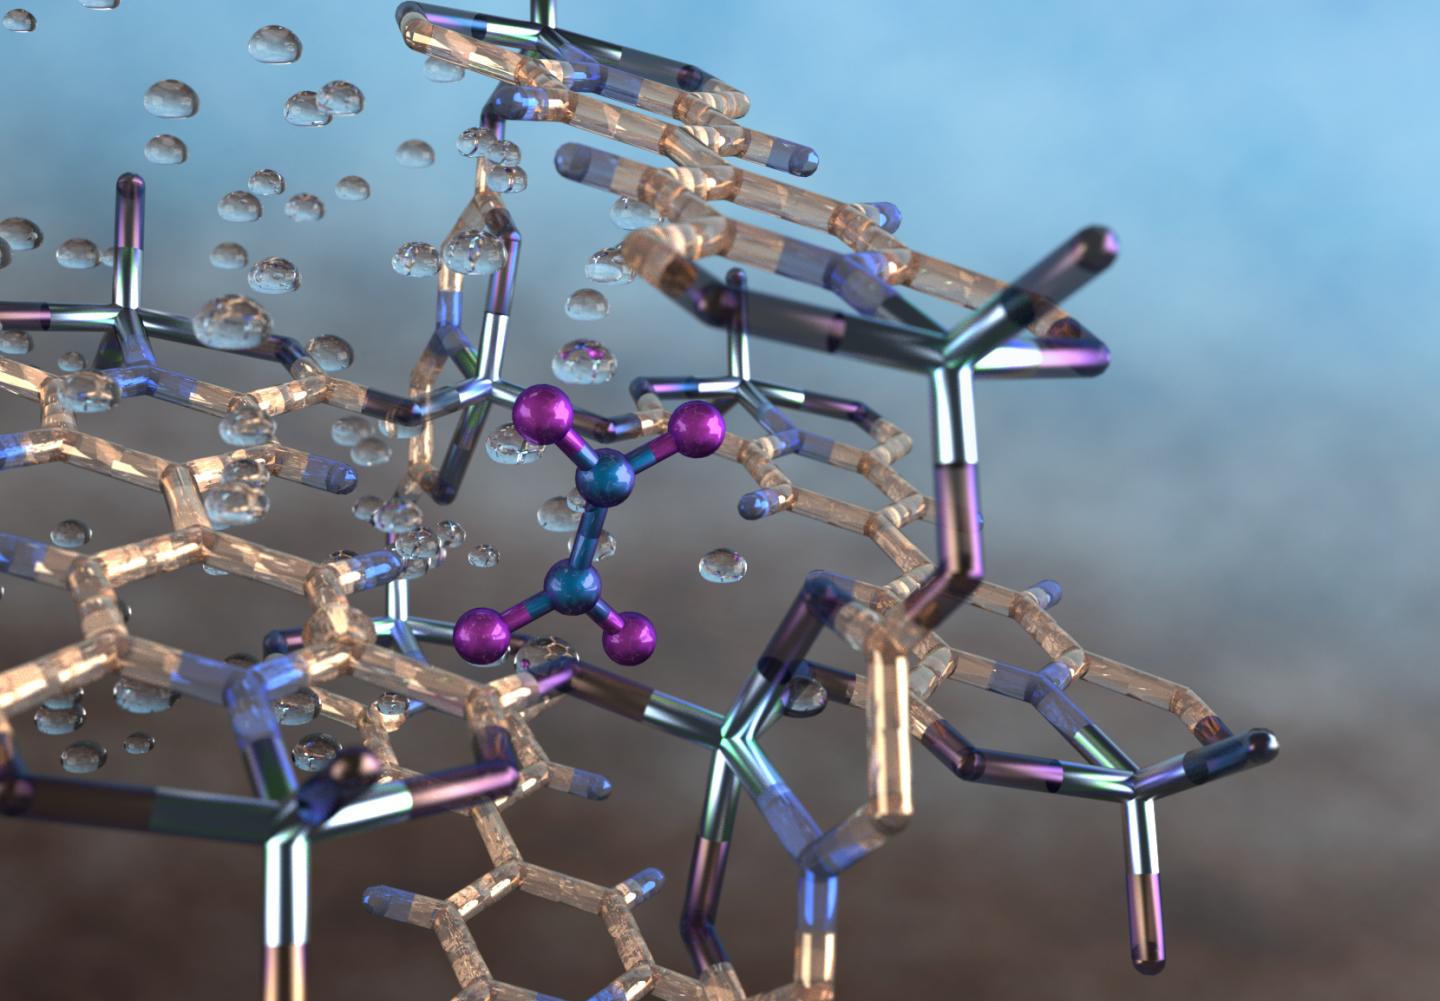 Nitrogen Dioxide Molecule Captured in a Nano-Size Pore of a Metal-Organic Framework Material